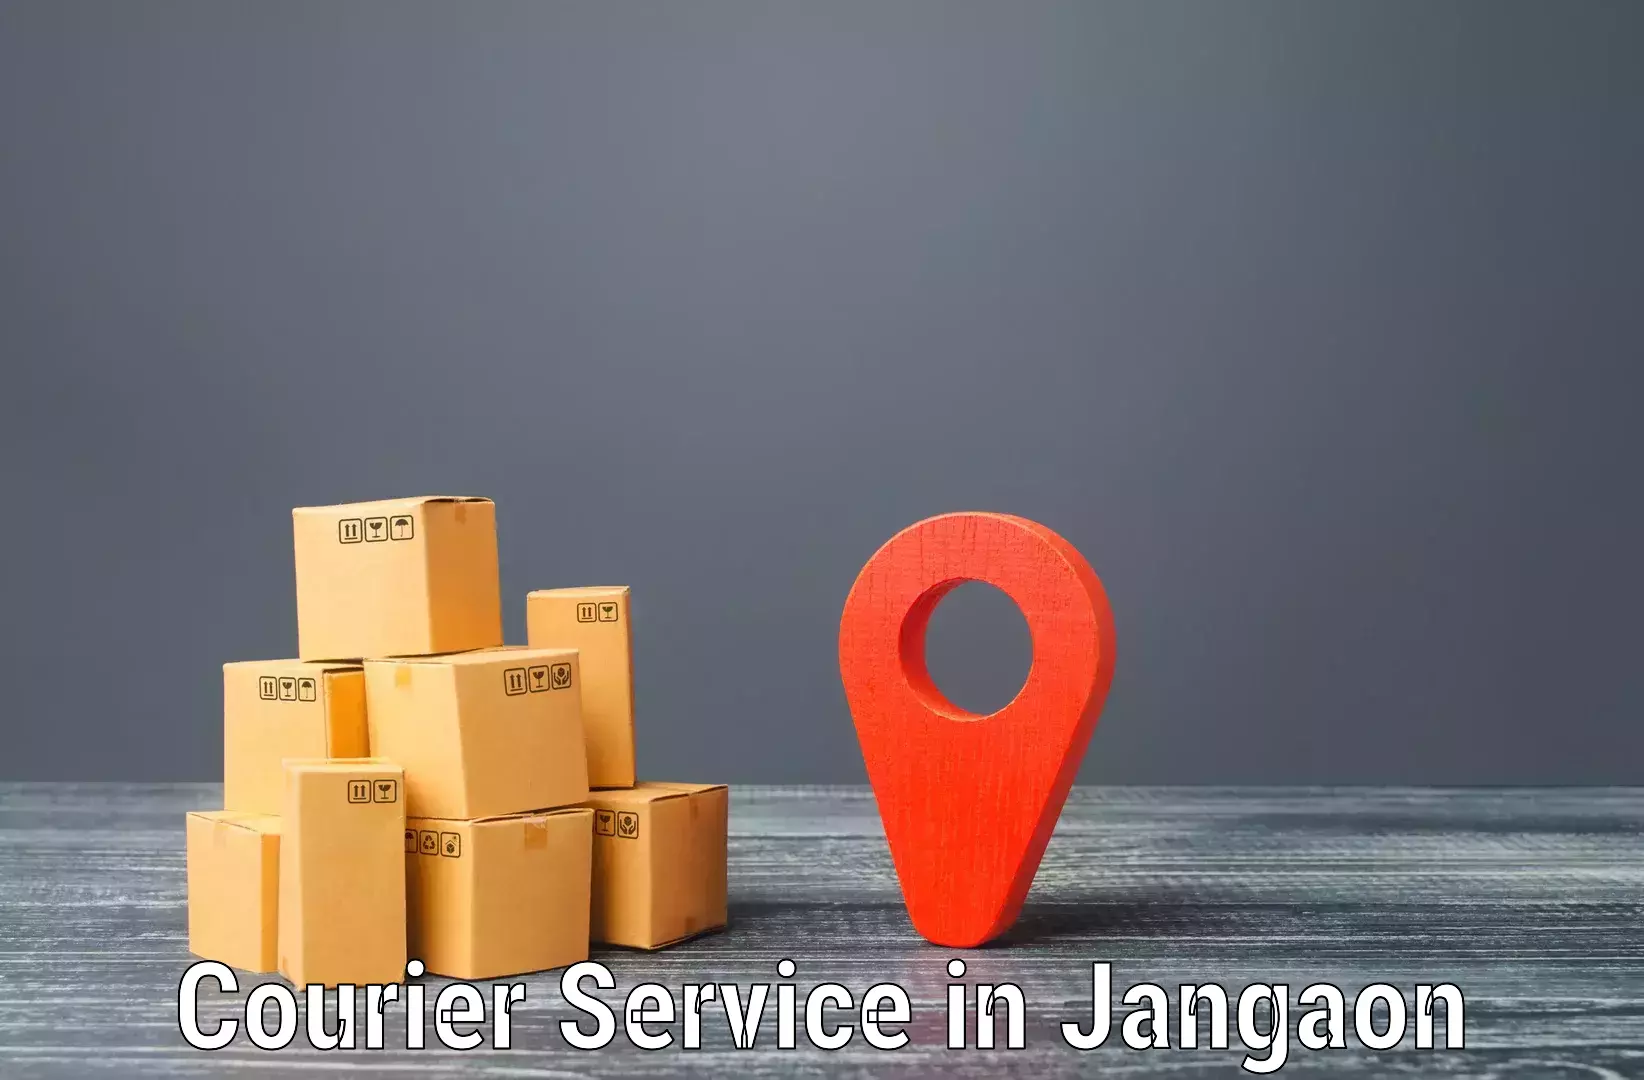 Innovative logistics solutions in Jangaon